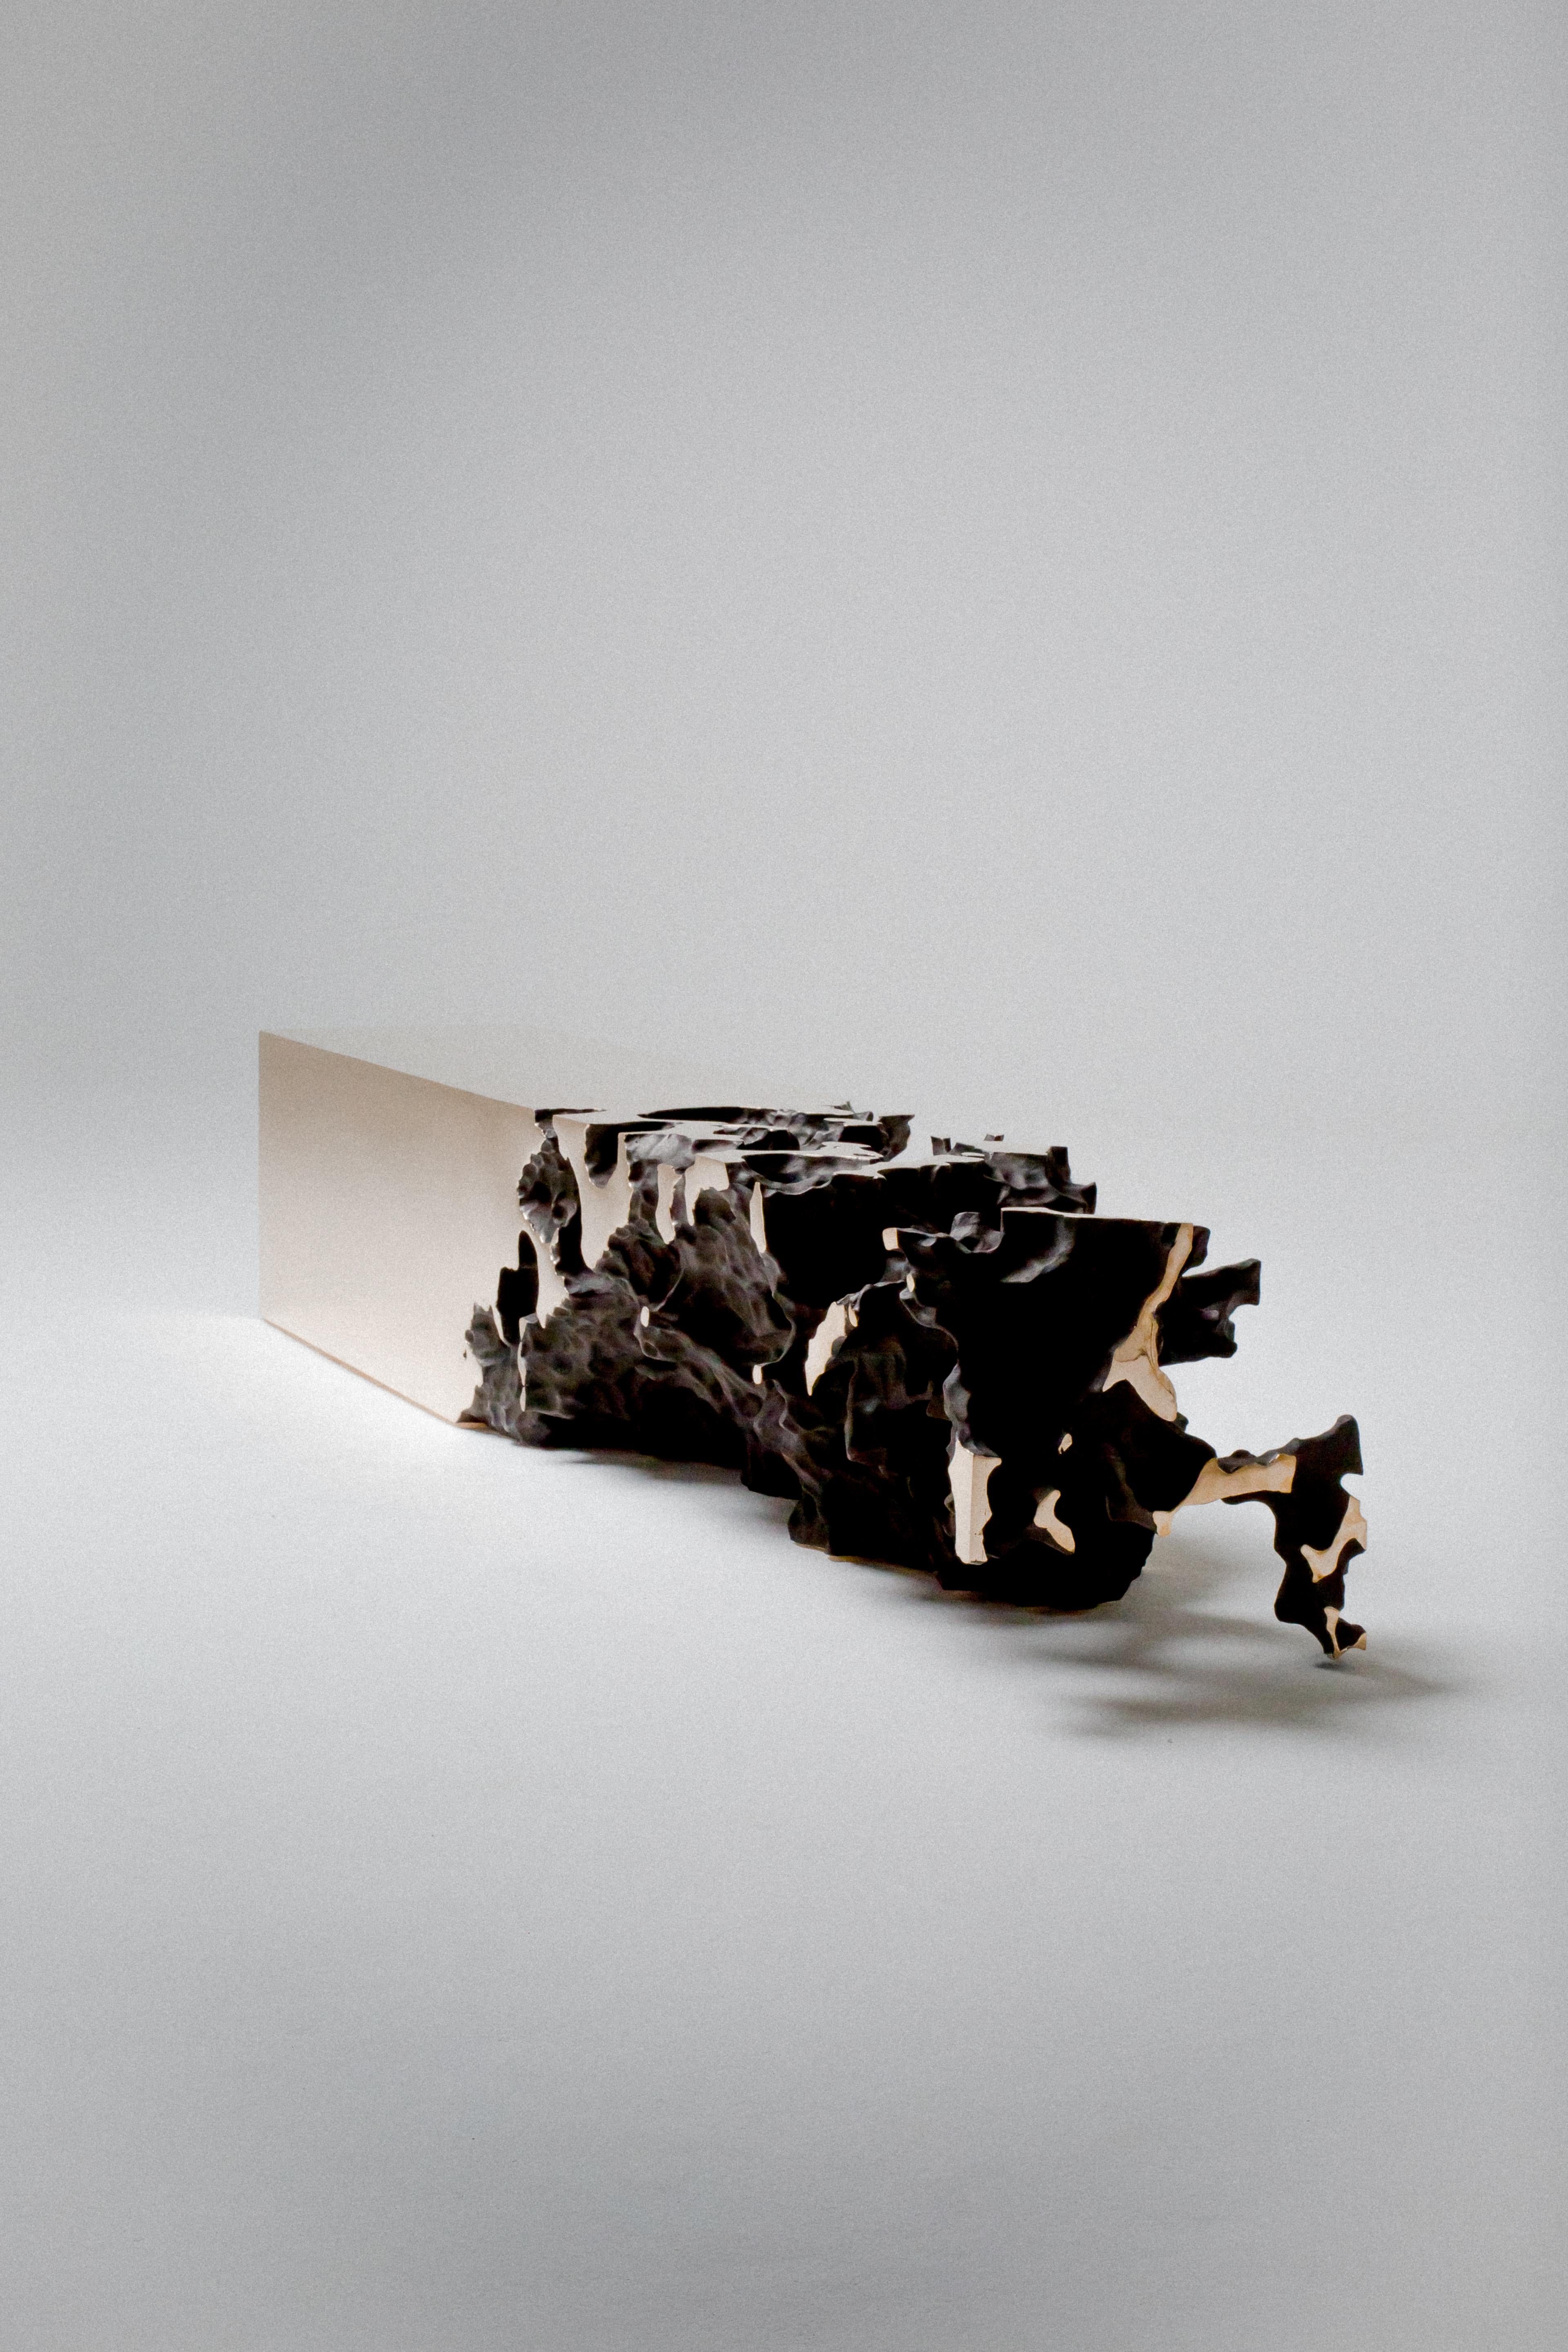 Driaan Claassen Abstract Sculpture - Polished, Black, Bronze, Patina, Abstract, Contemporary, Modern, Sculpture